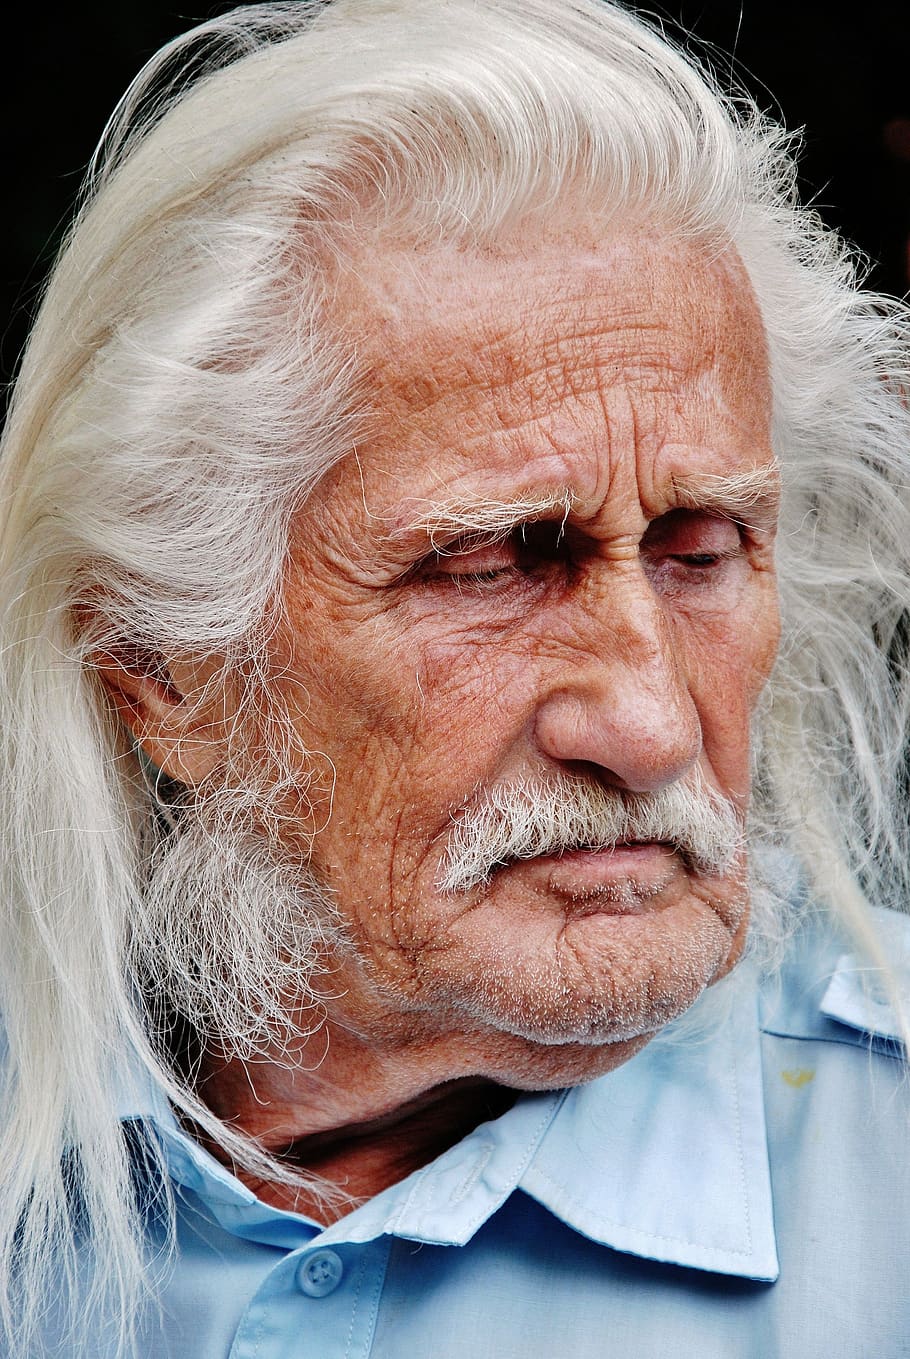 HD wallpaper: Man Wearing Blue Collared Top, elder, elderly man, long hair  | Wallpaper Flare